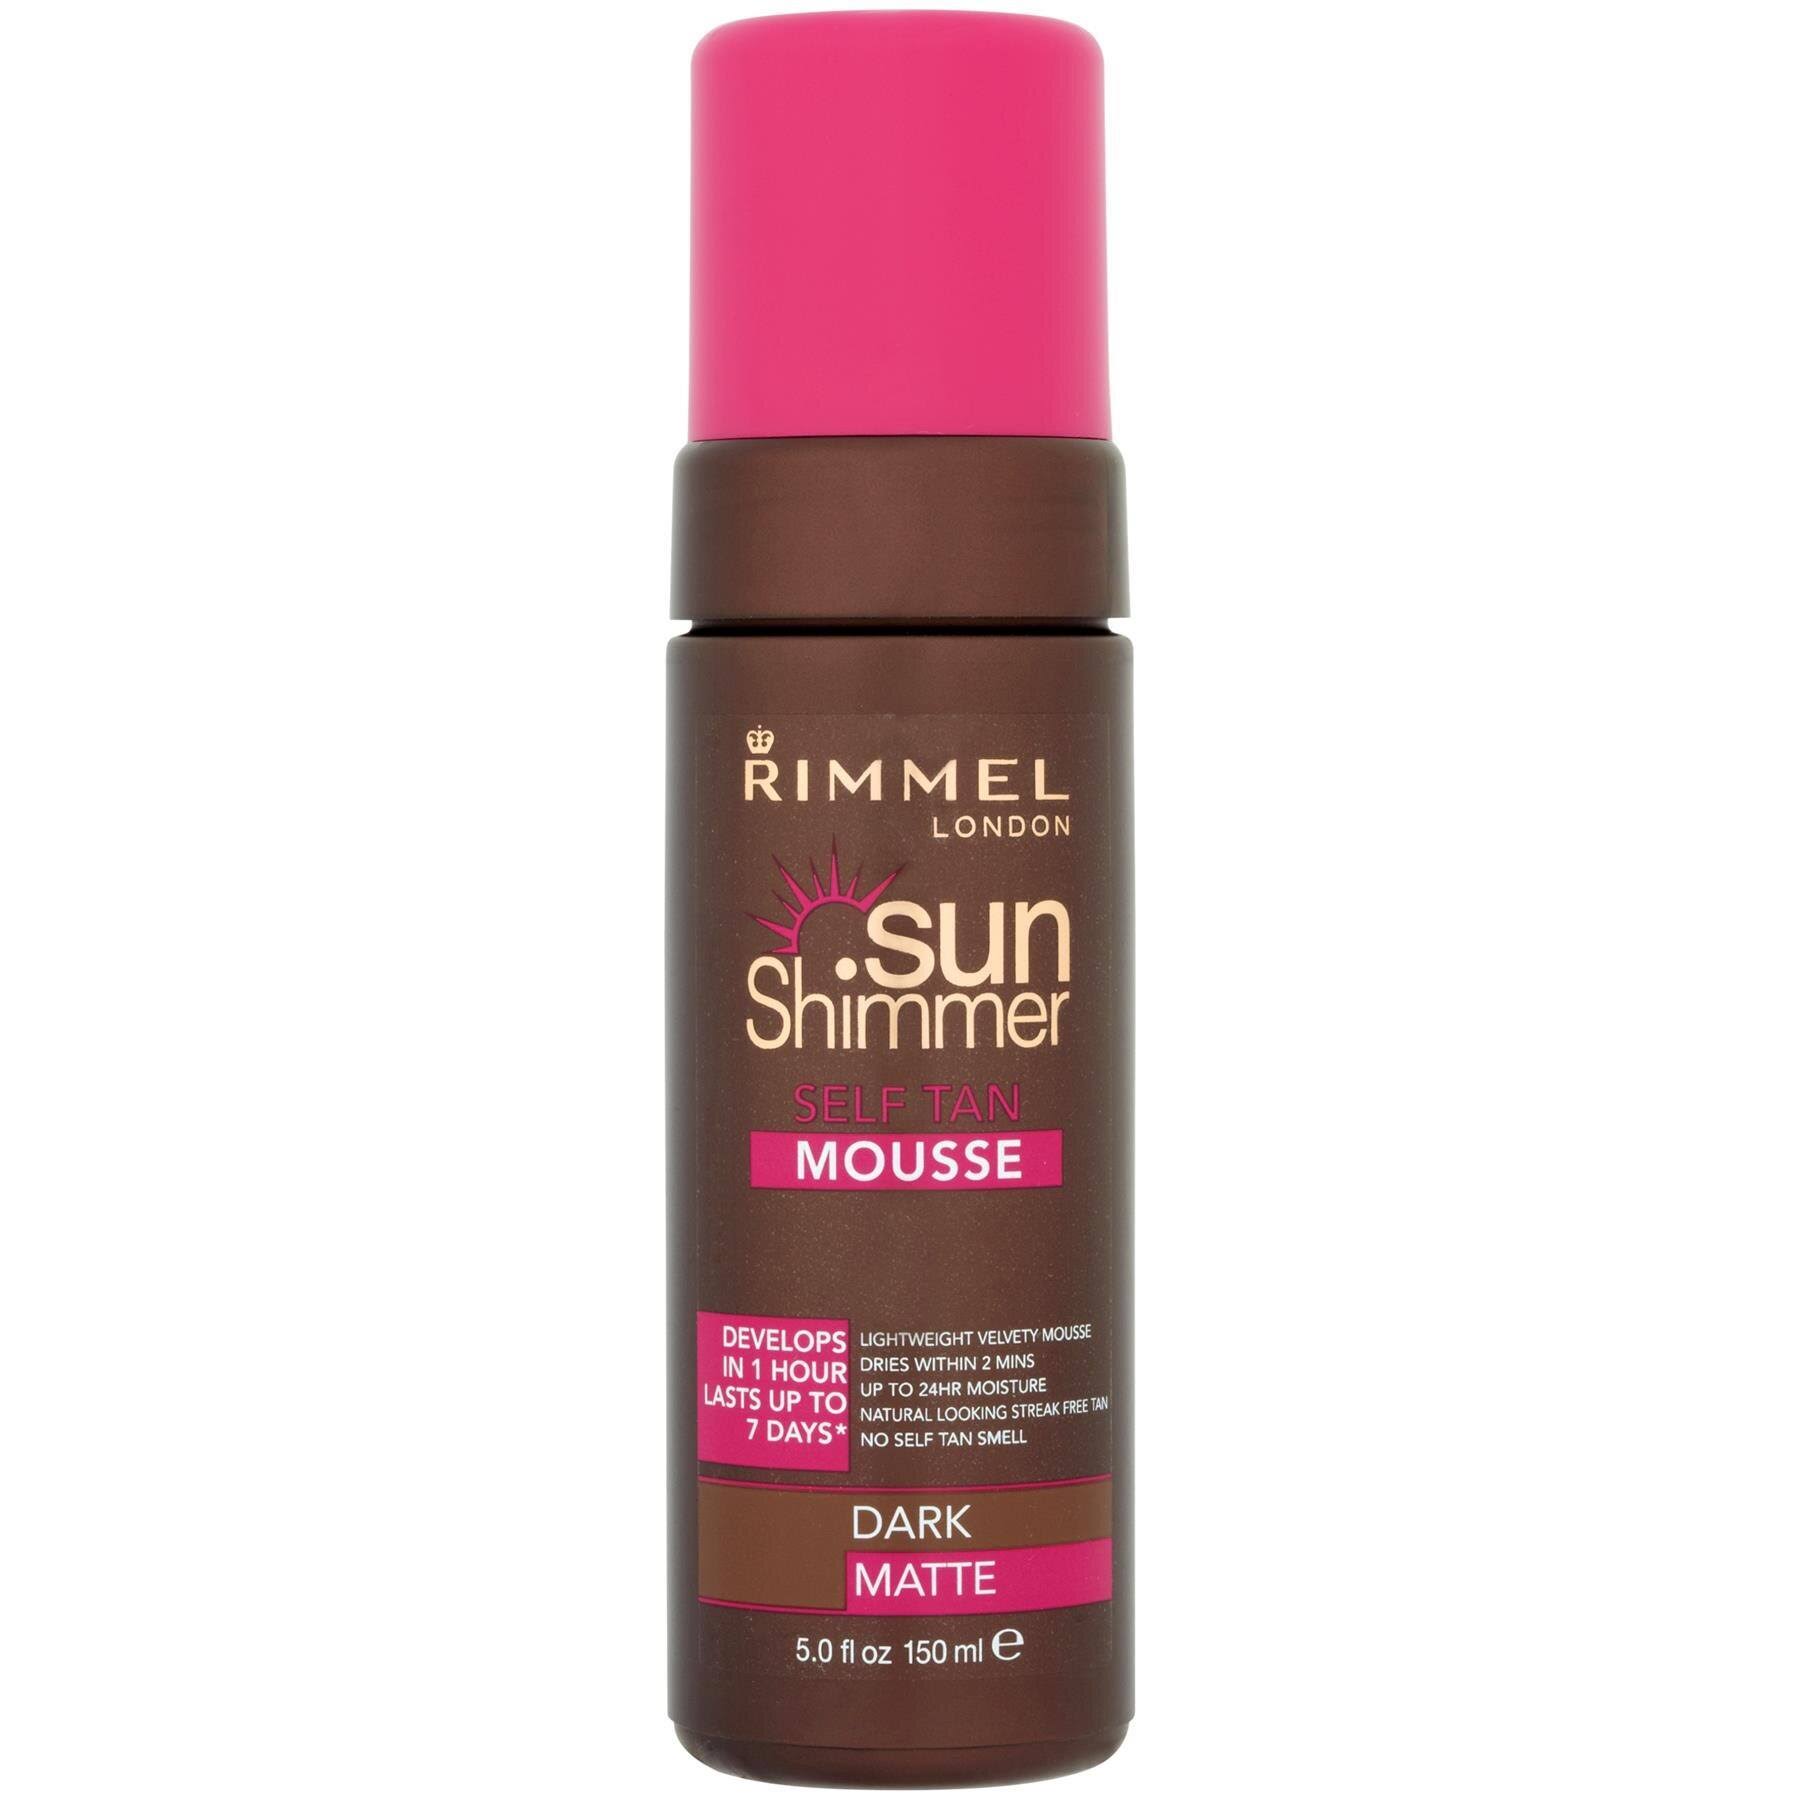 Rimmel Sun Shimmer Self Tan Mousse - Dark Matte, 150ml